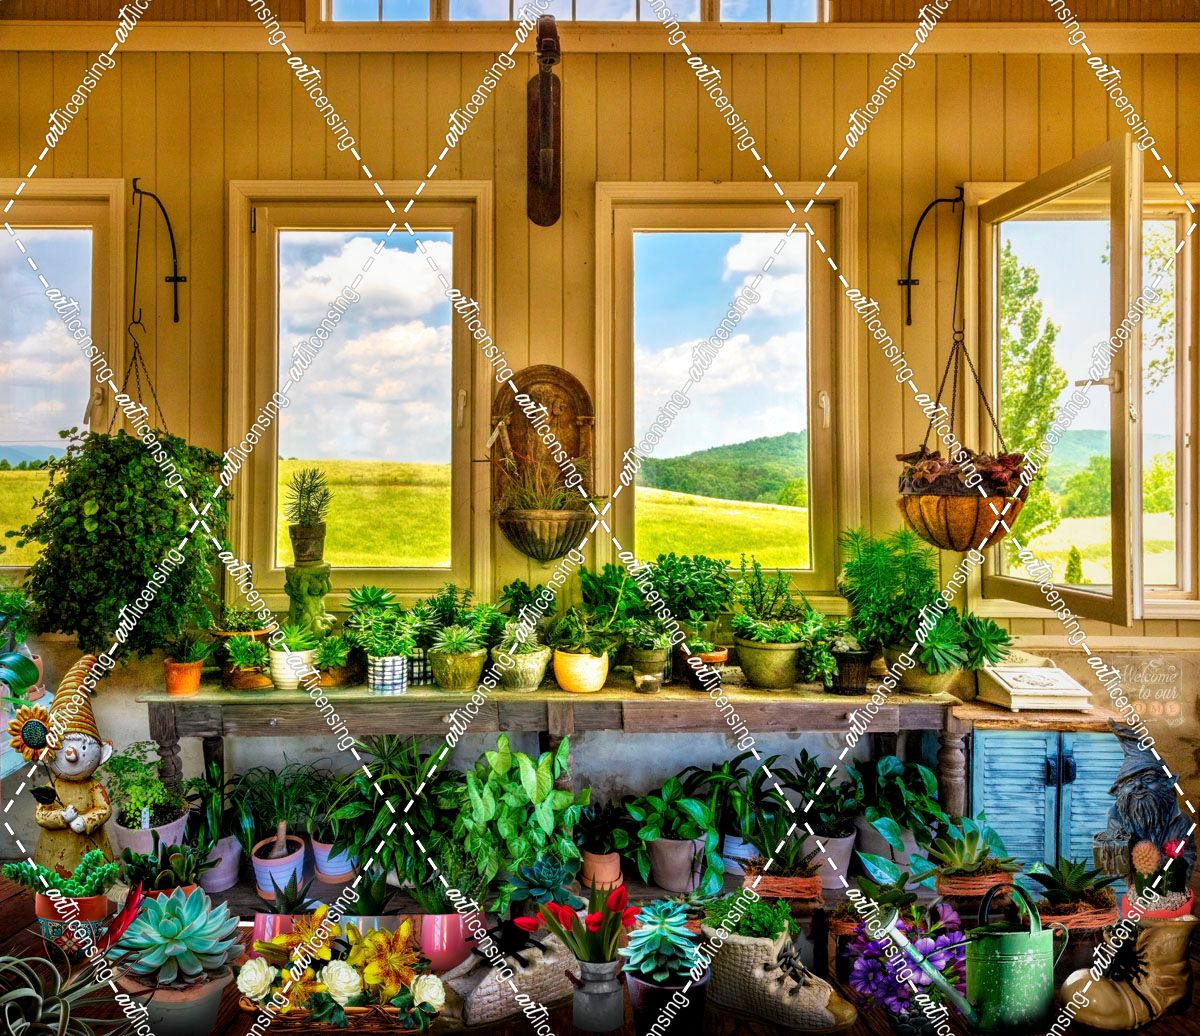 Plants in the Vineyard Greenhouse Window